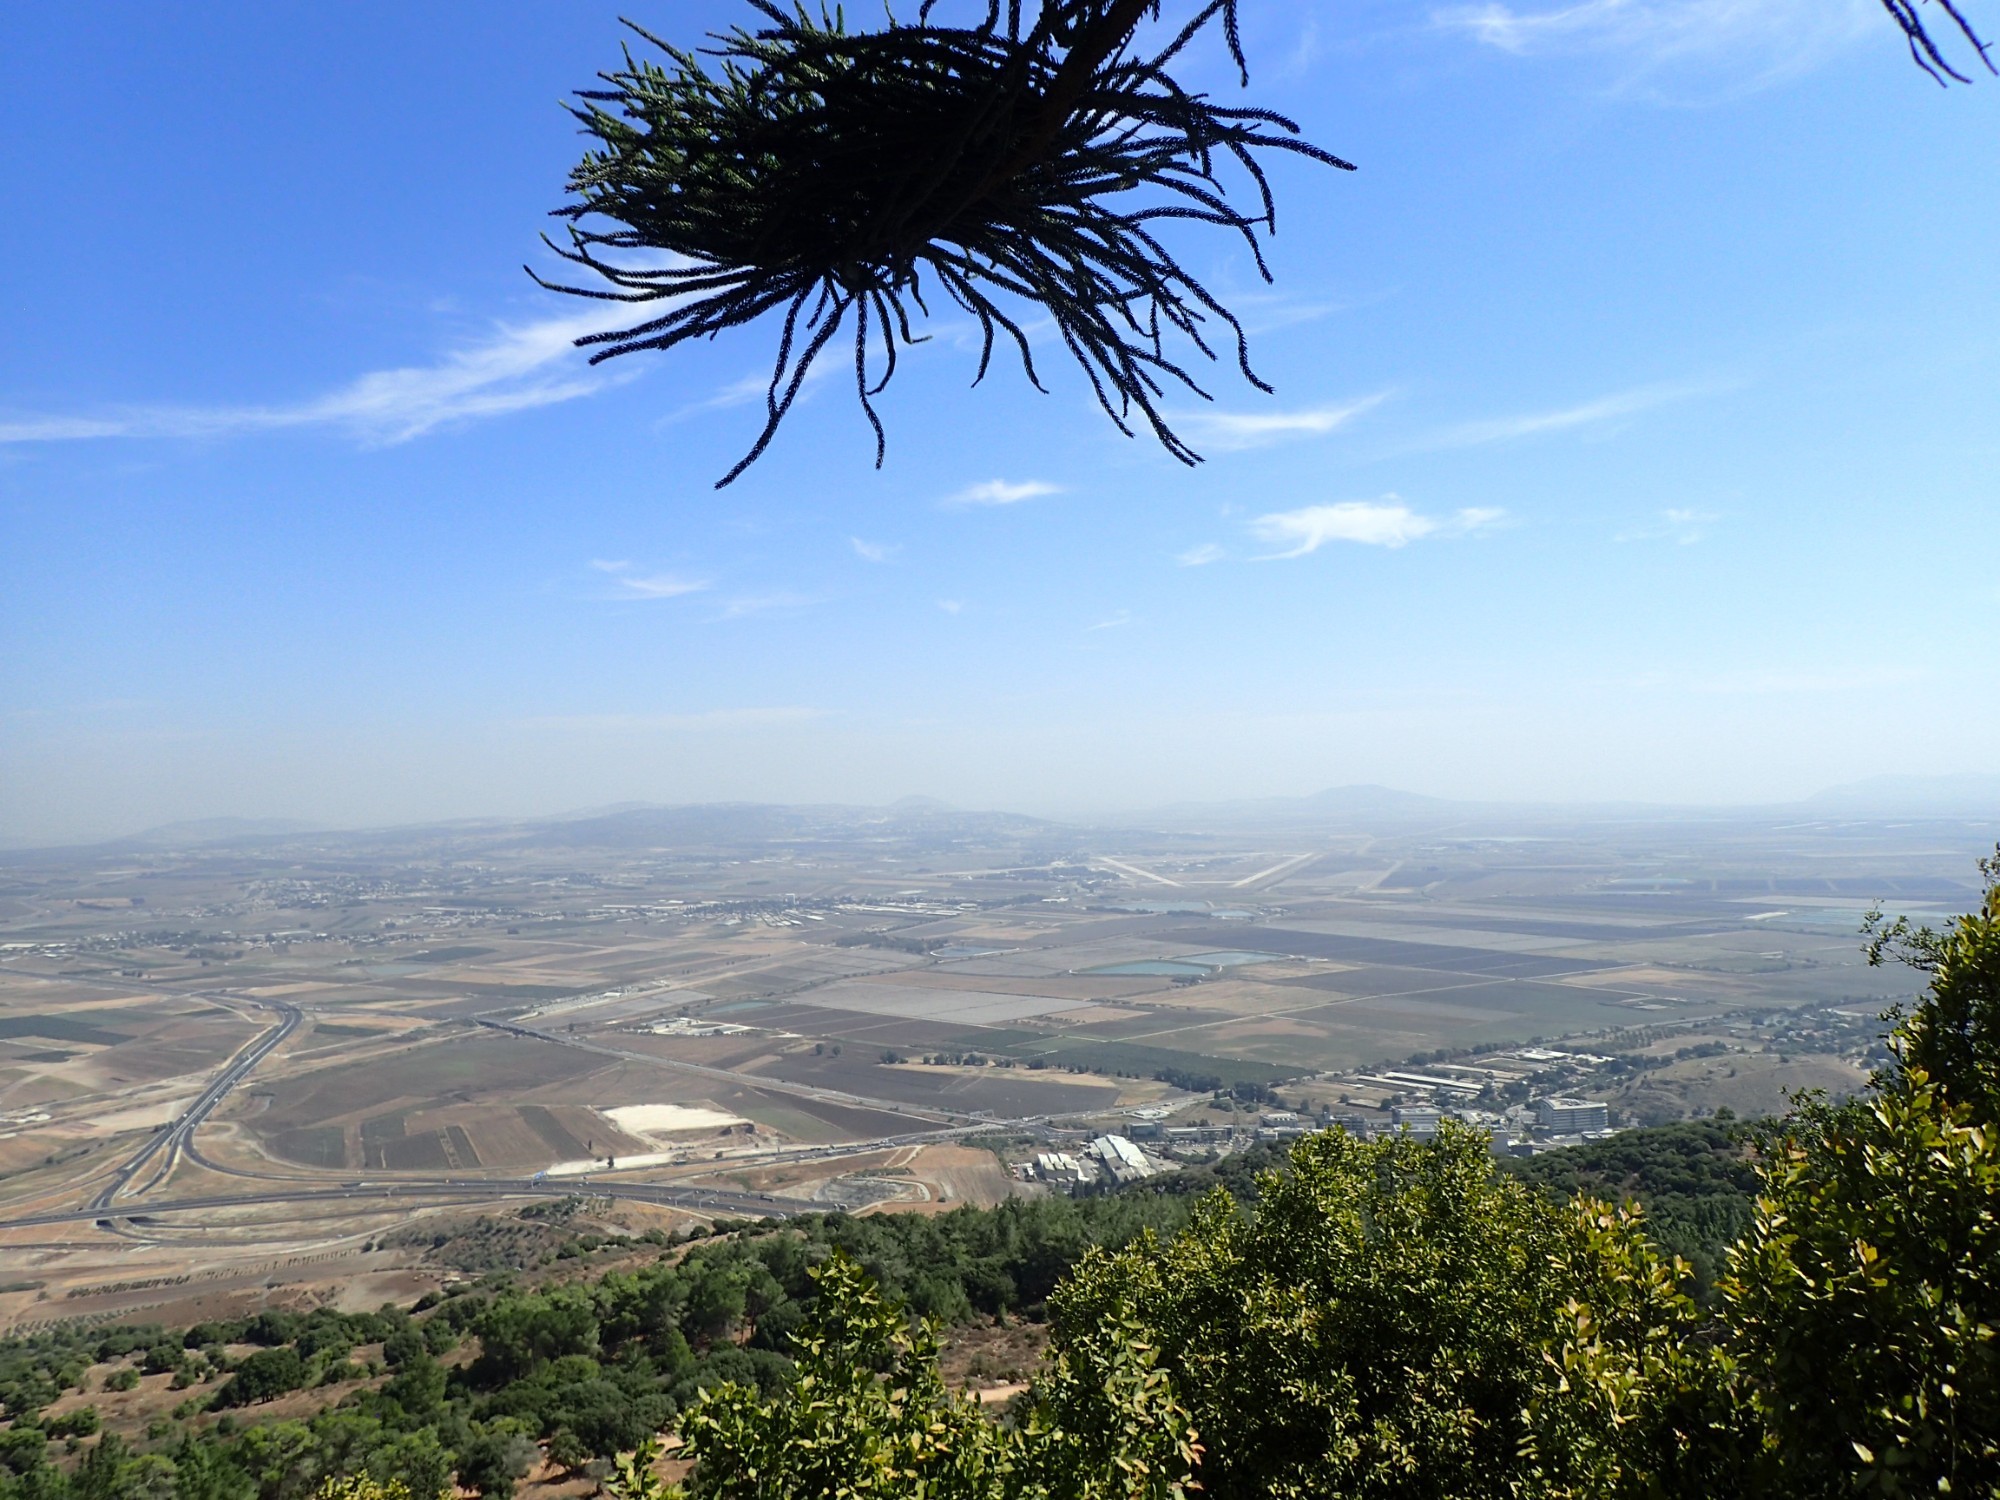 Jezreel Valley, Israel